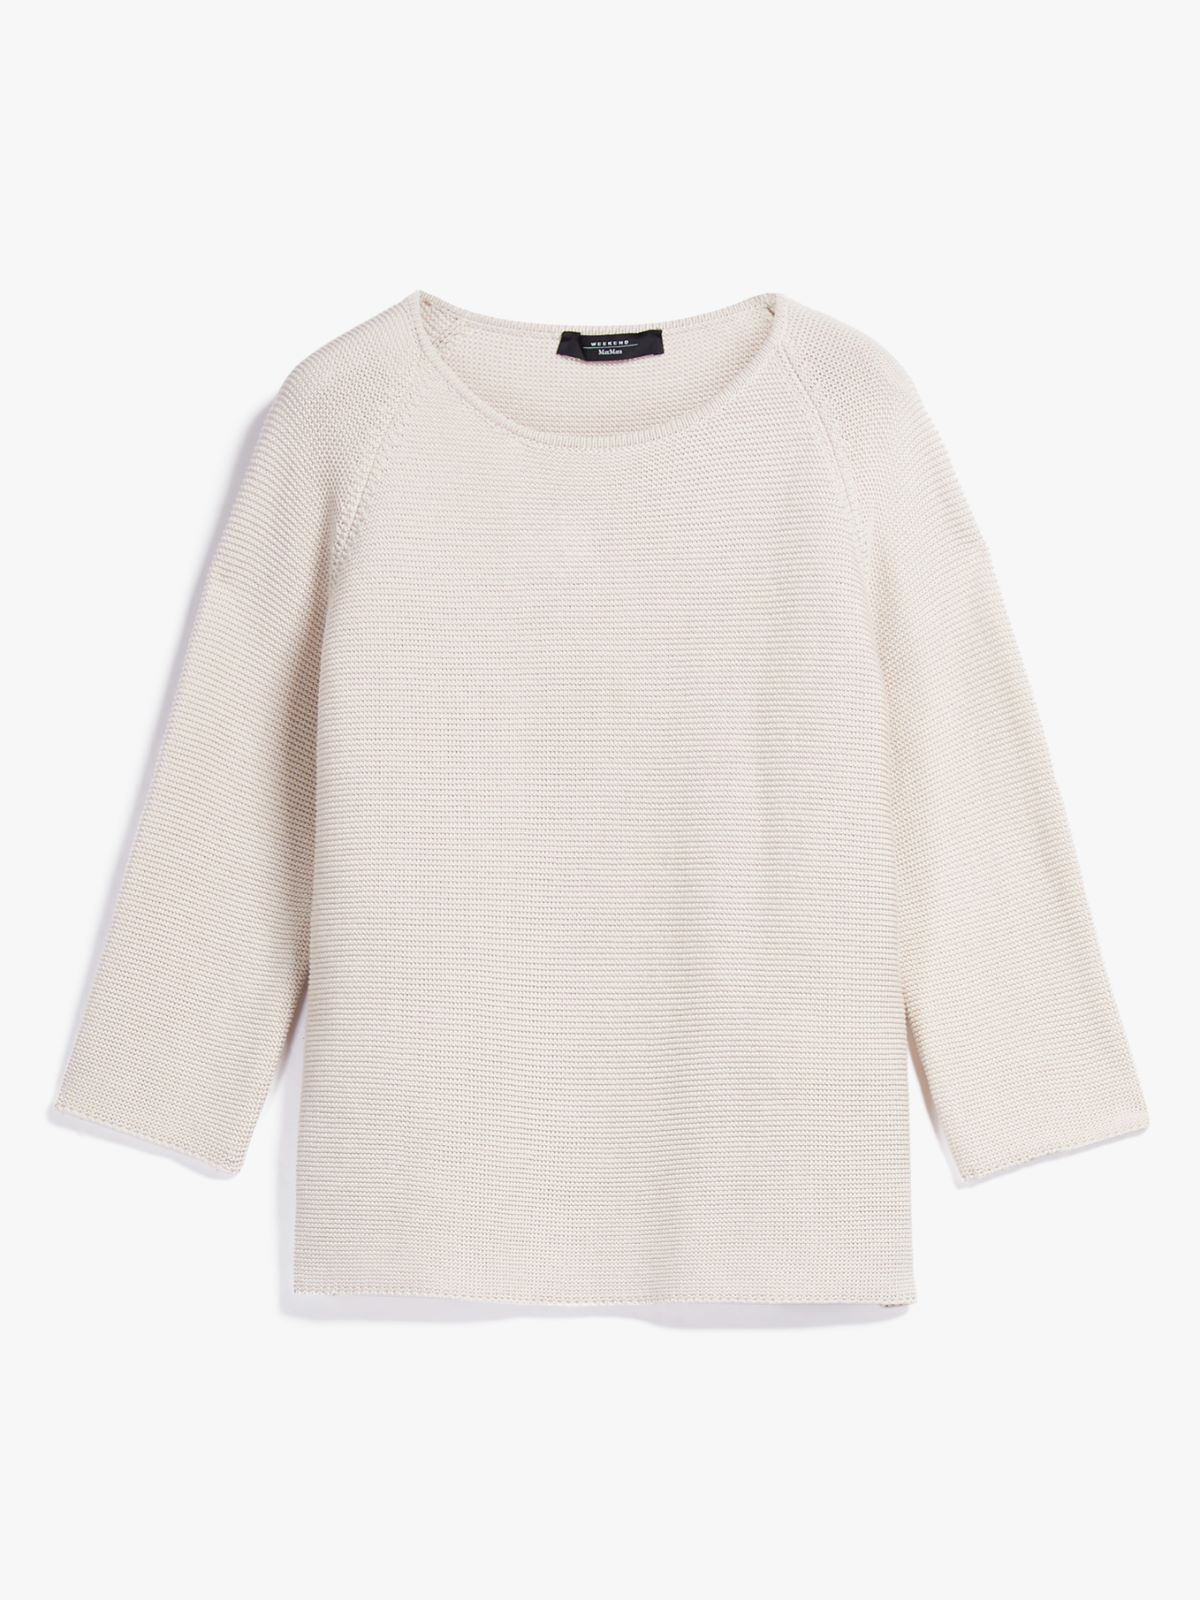 Cotton yarn sweater    - IVORY - Weekend Max Mara - 6